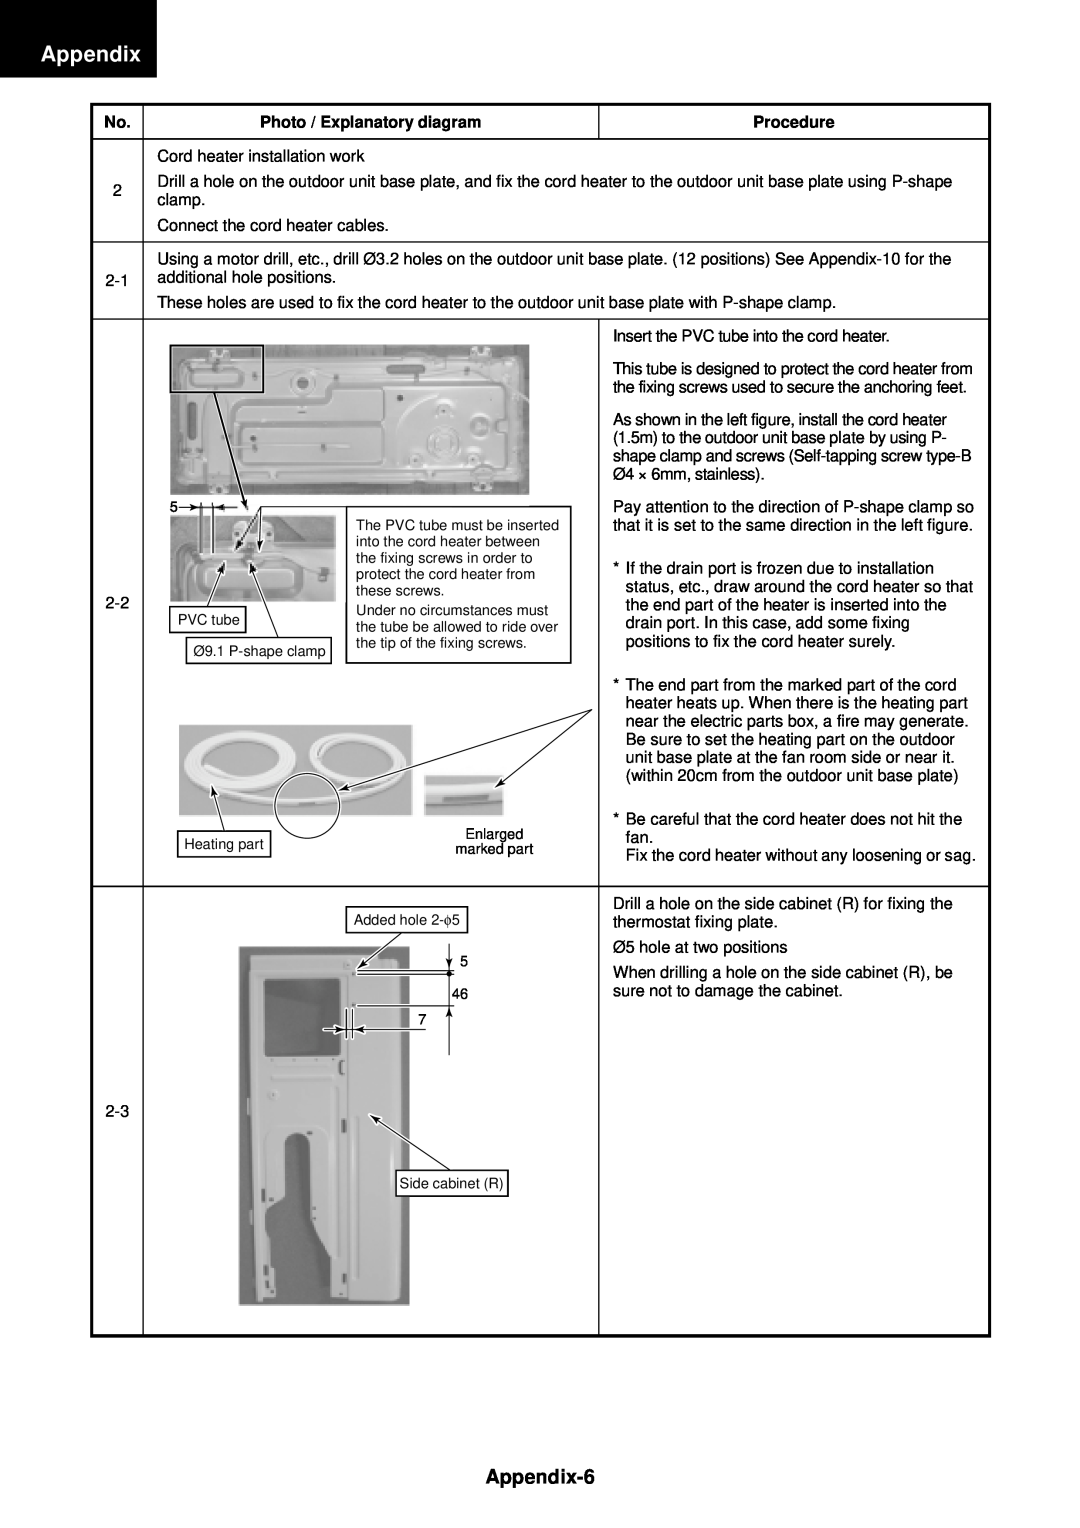 Toshiba RAS-13GAVP-E Appendix-6, Photo / Explanatory diagram, Procedure, the fixing screws in order to, these screws 